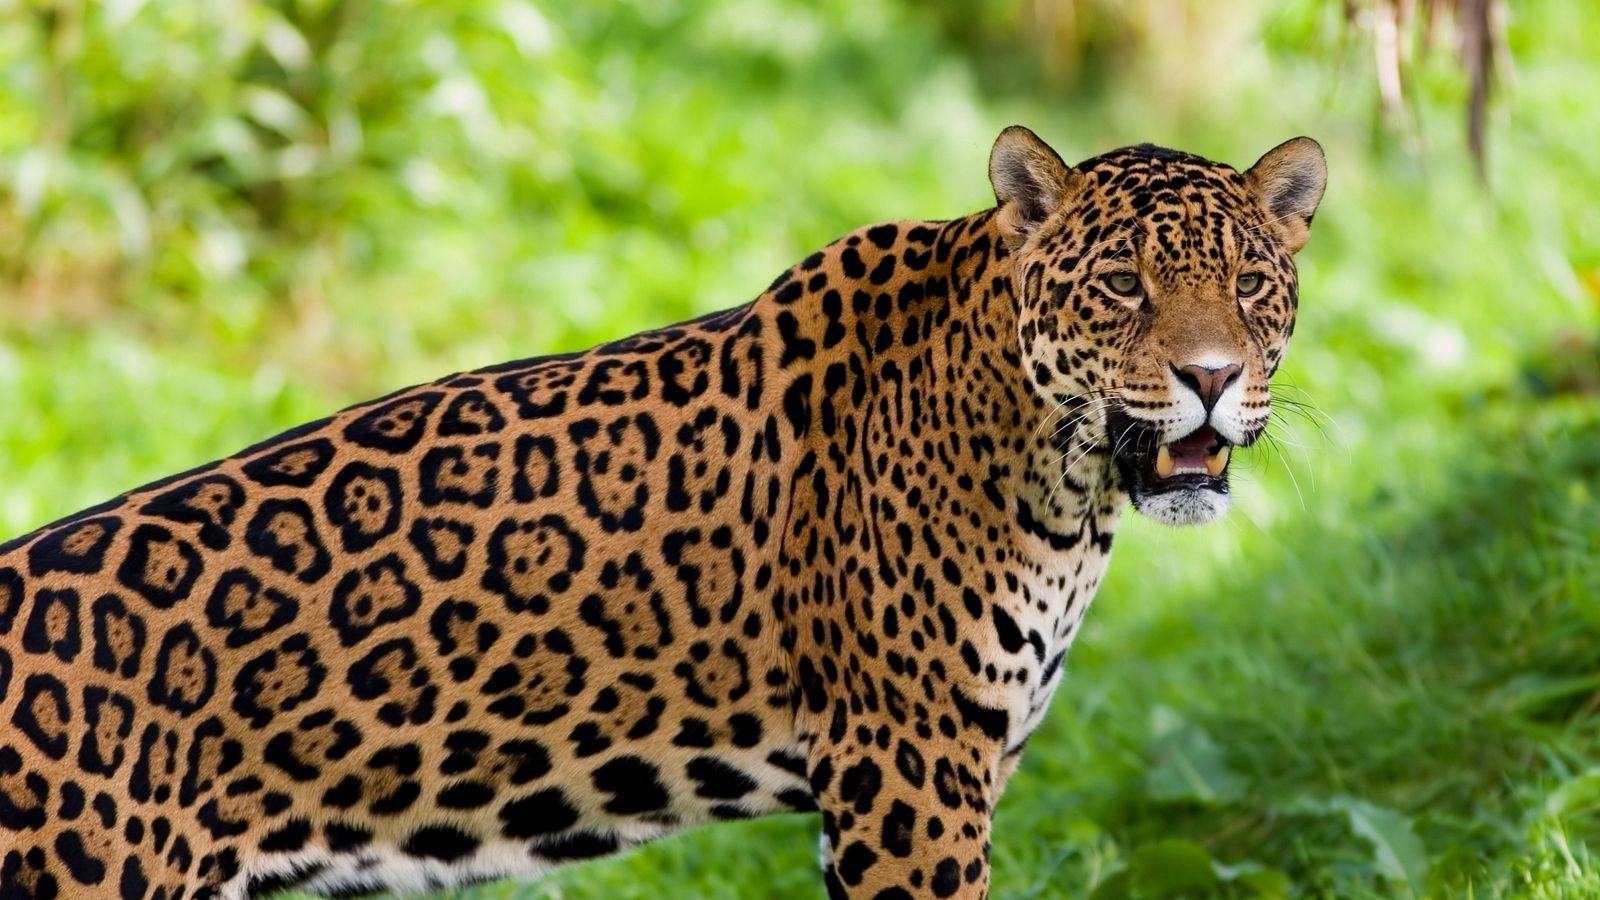 Download Wallpaper 1600x900 Jaguar Wild Cat Predator Widescreen 169